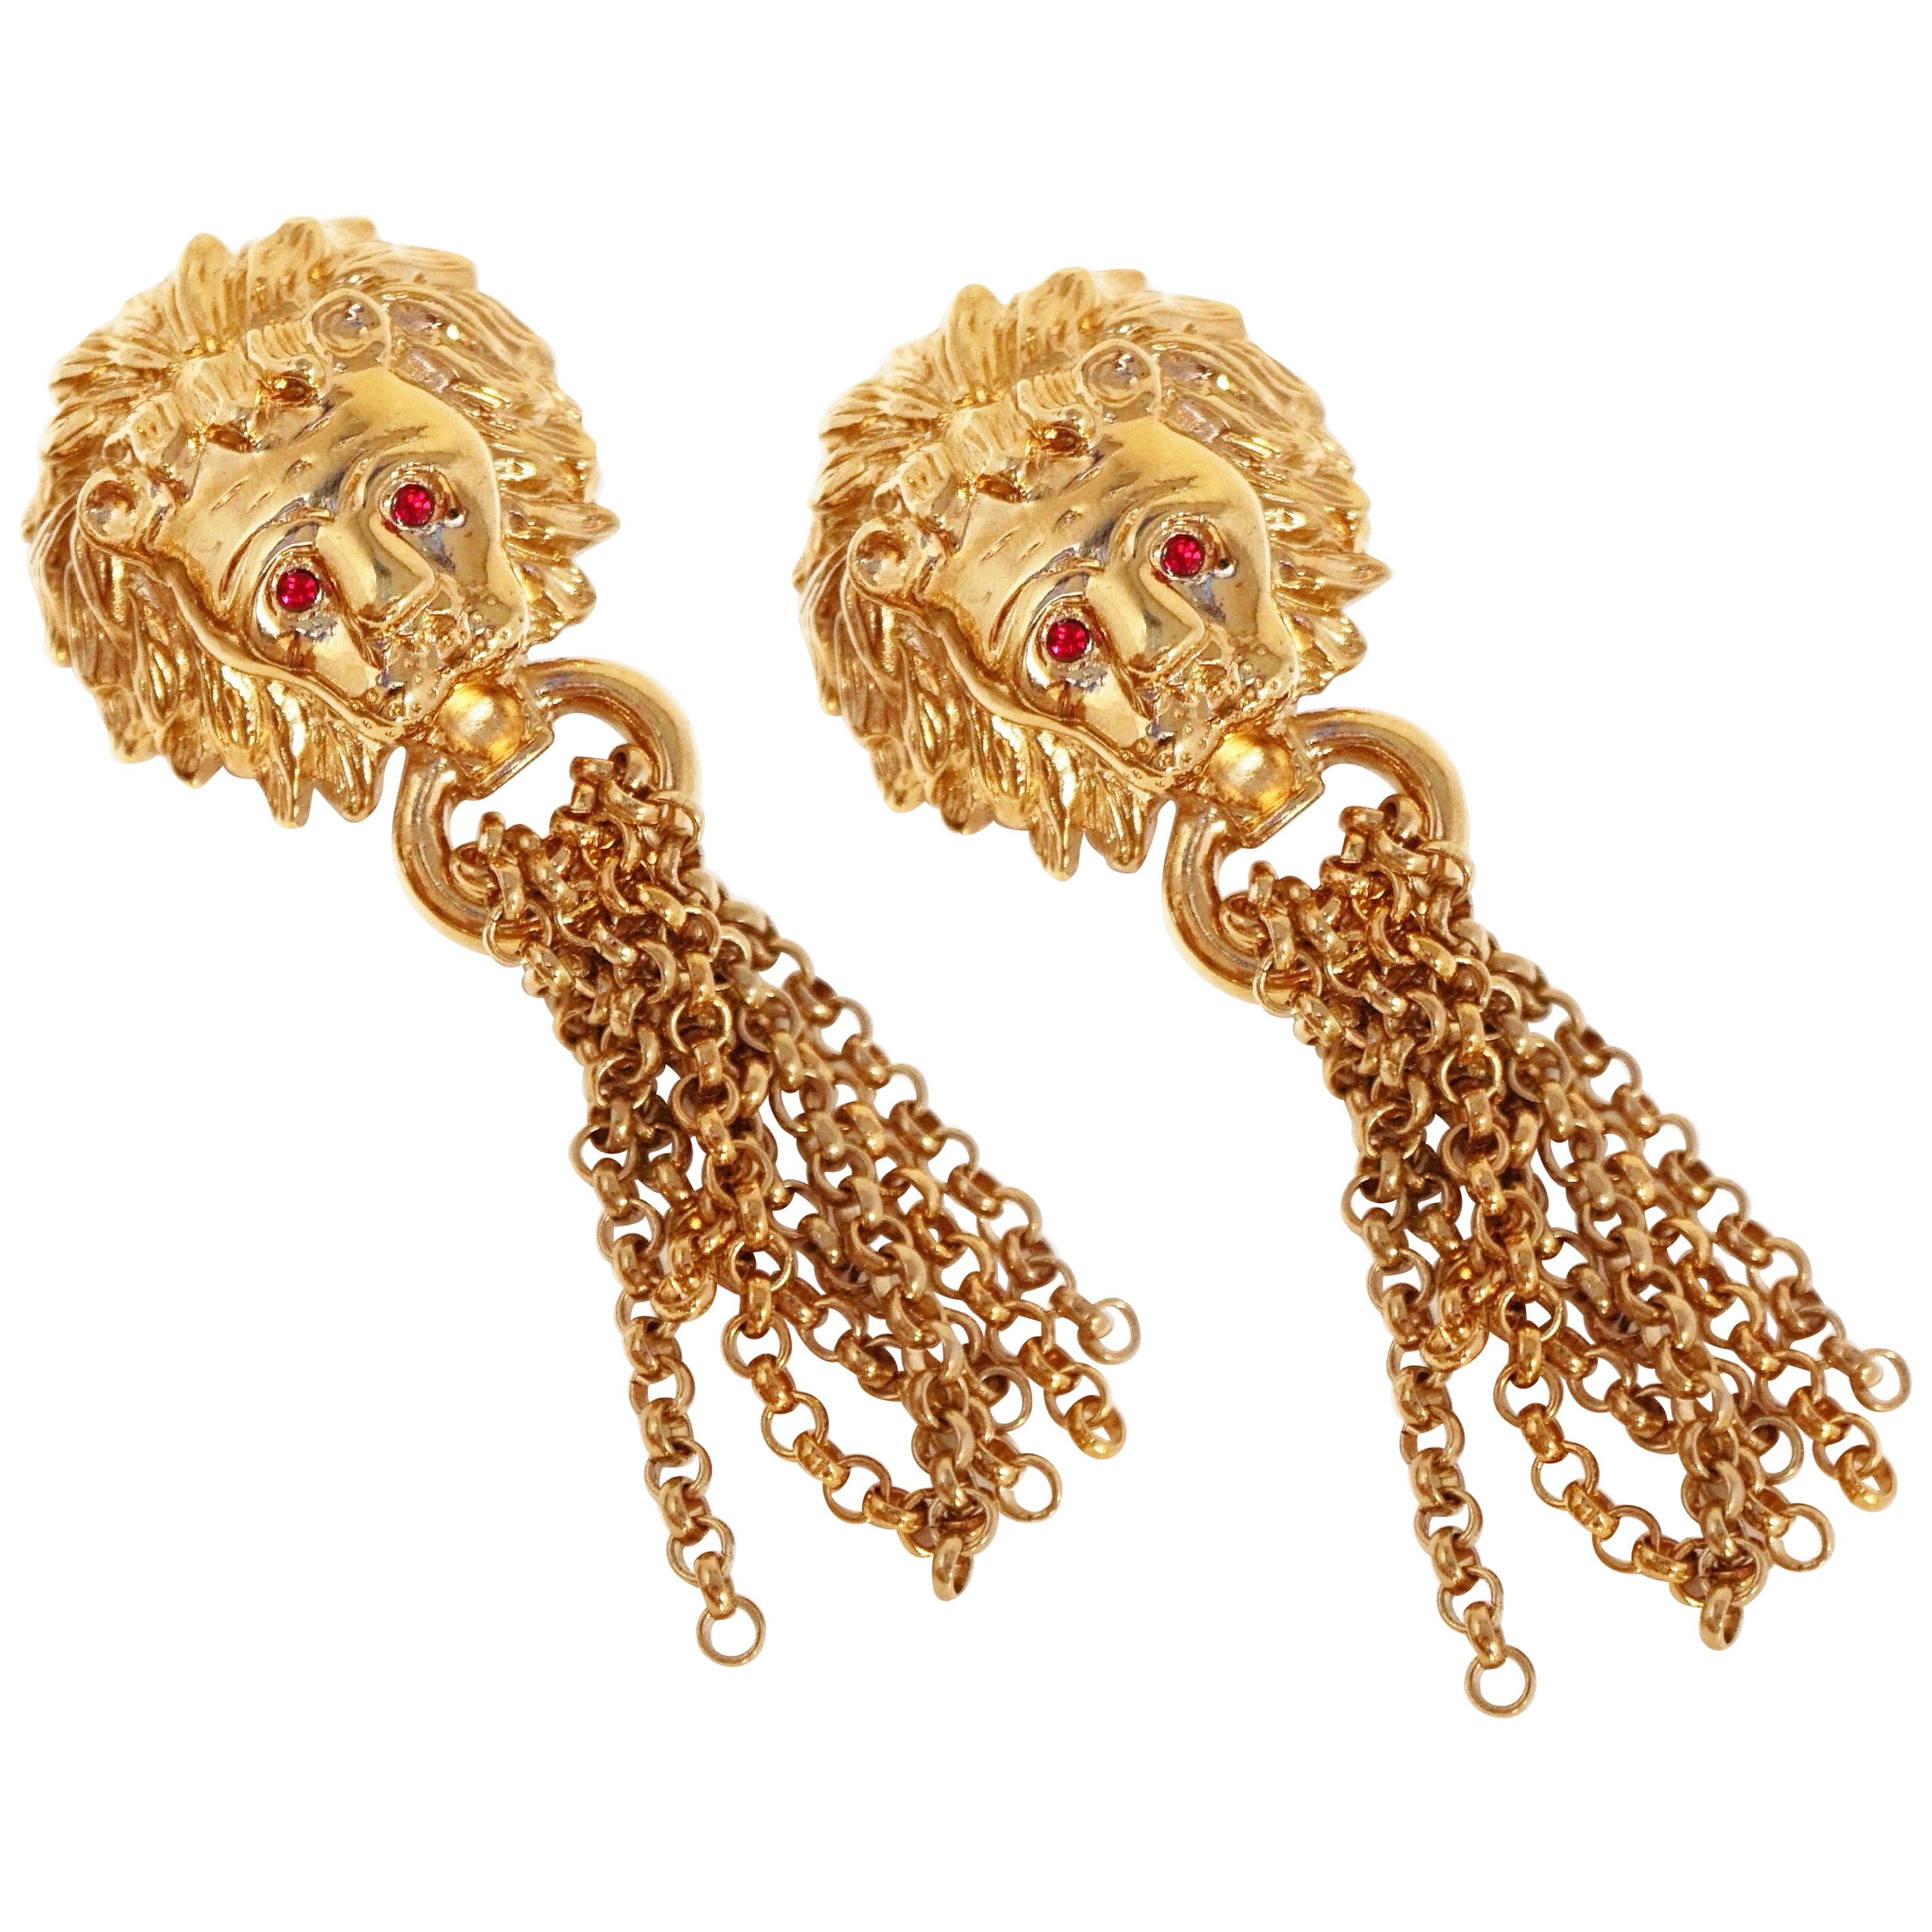 1980s Oversized Italian Designer Lion Statement Earrings with Chain Tassels